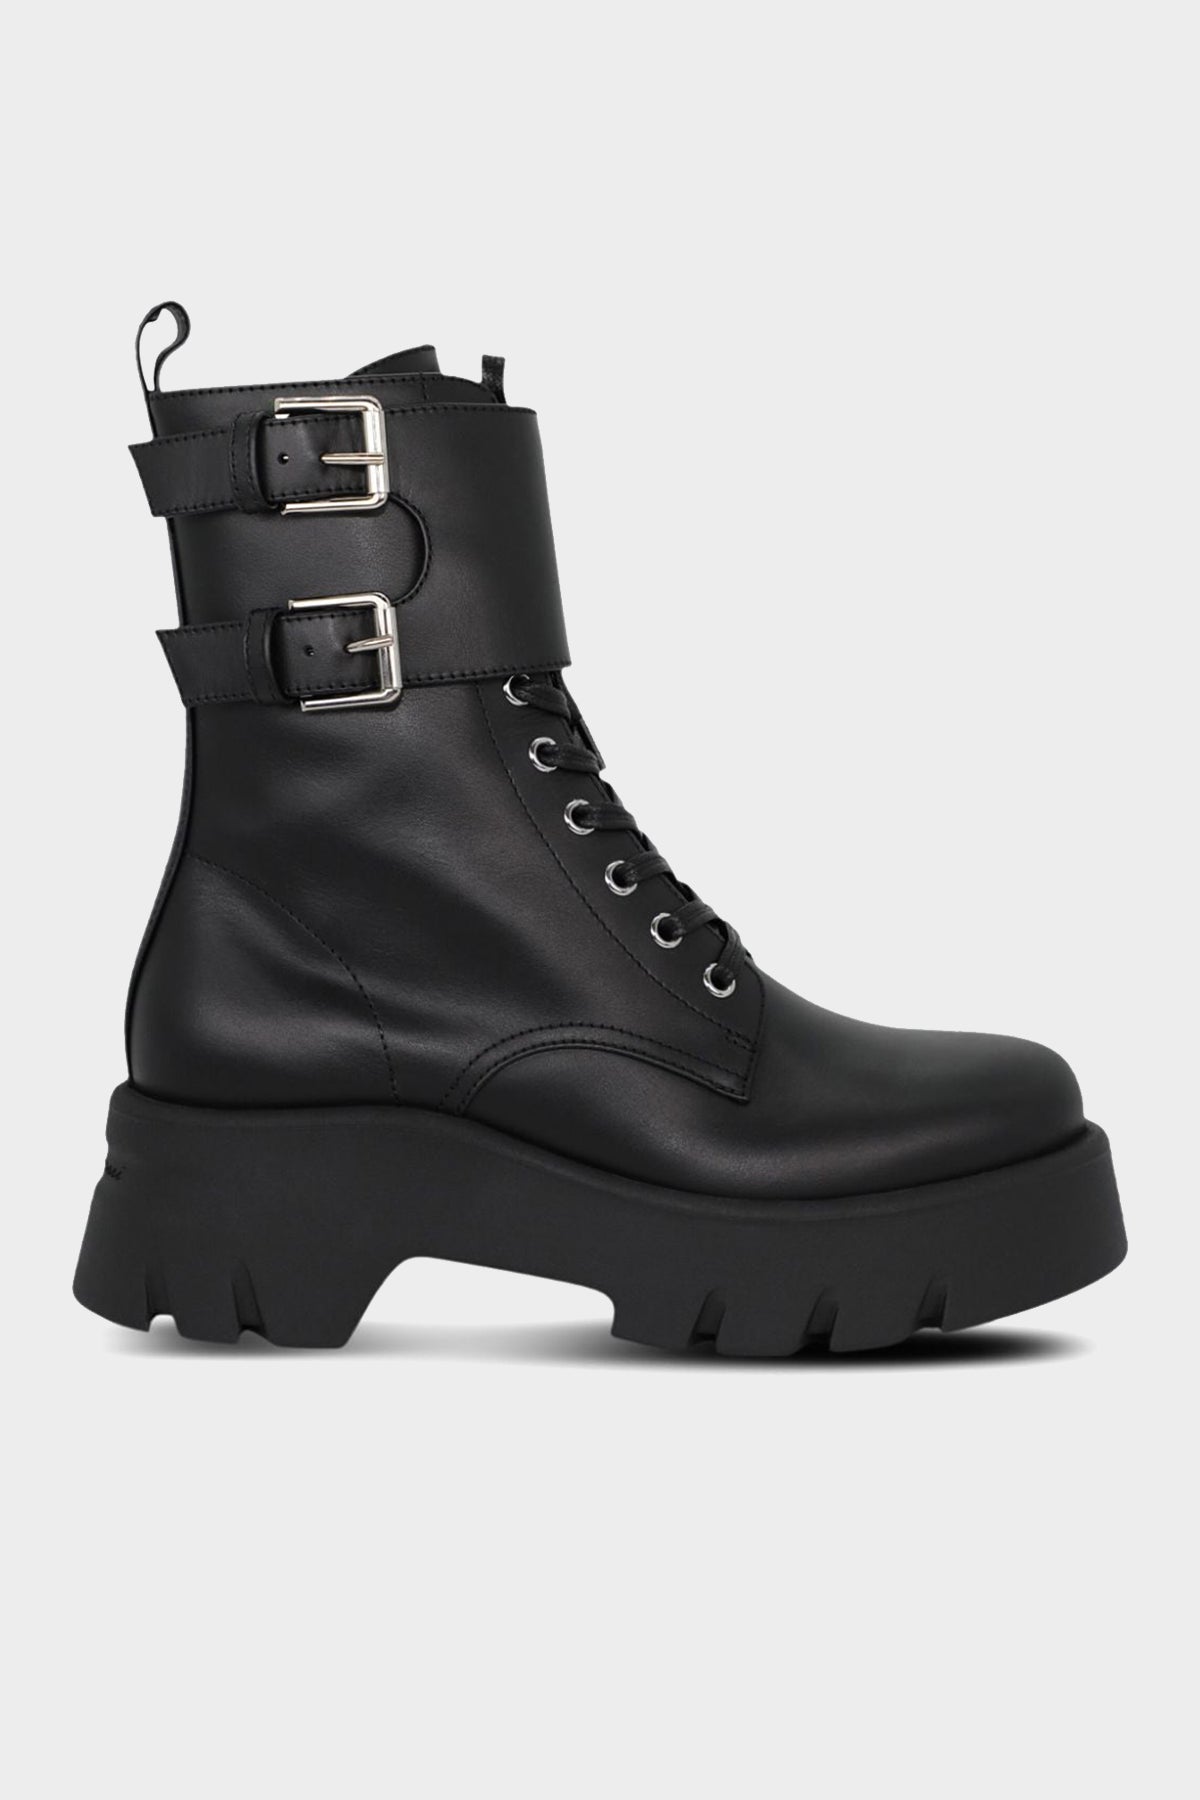 Marloe Leather Combat Boots in Black - shop-olivia.com